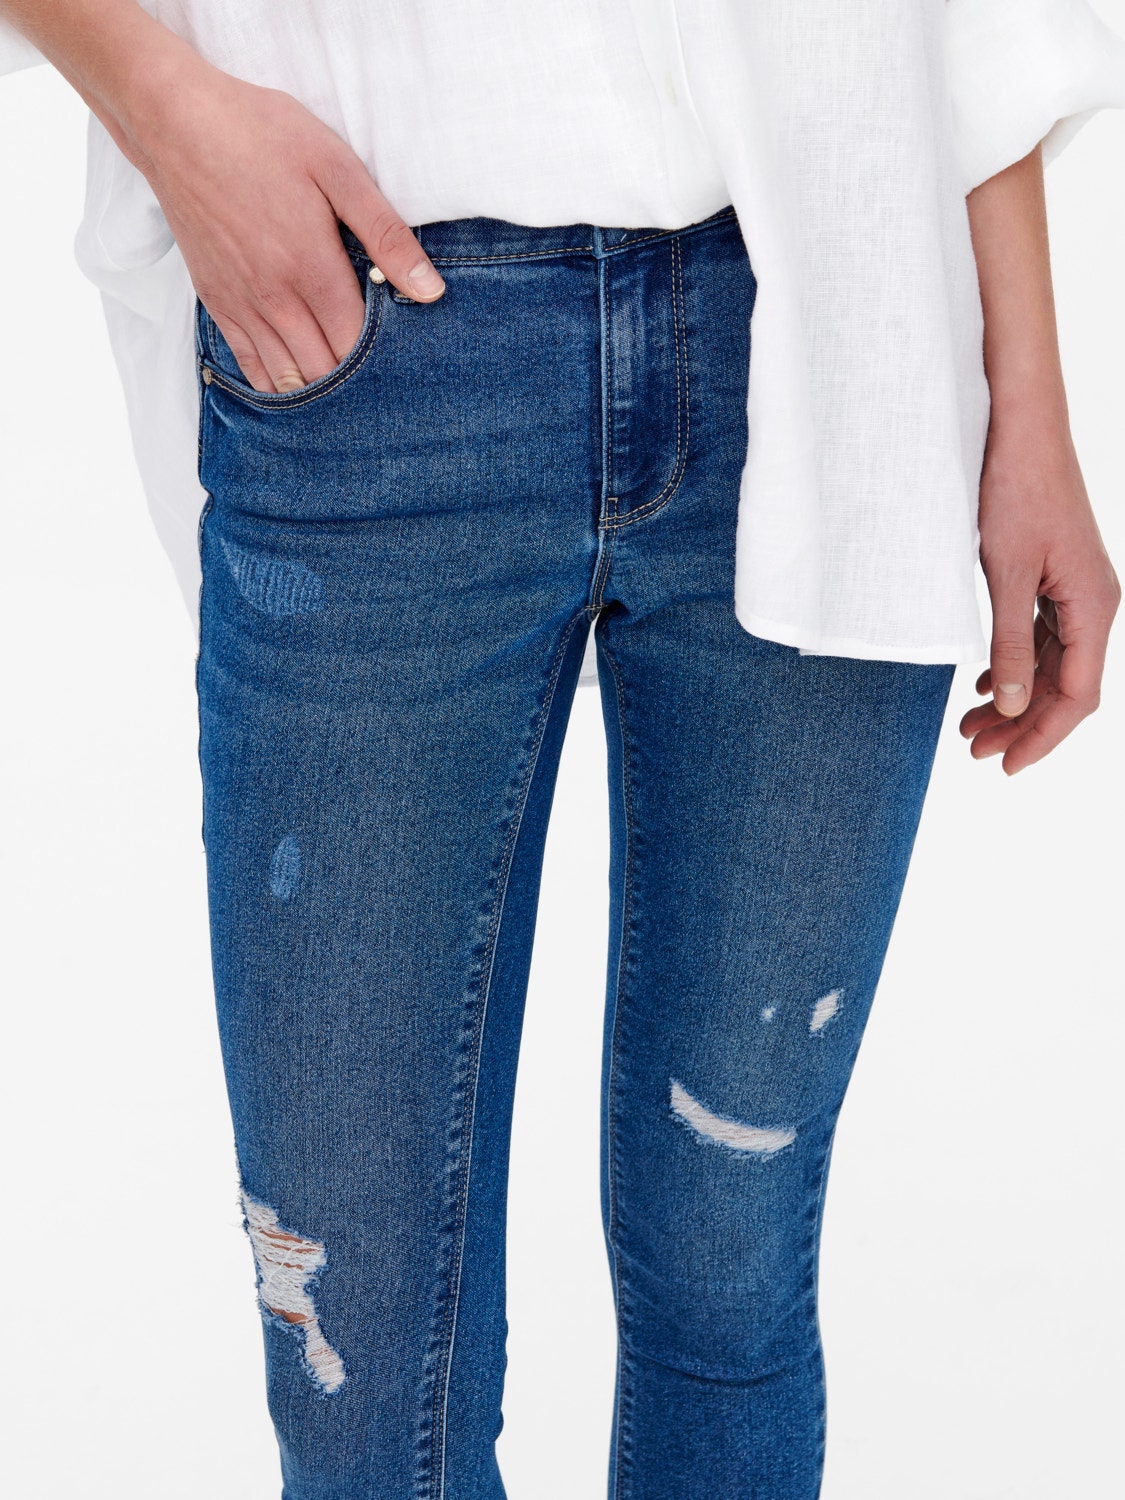 ONLY Skinny Fit Jeans -Medium Blue Denim - 15223100